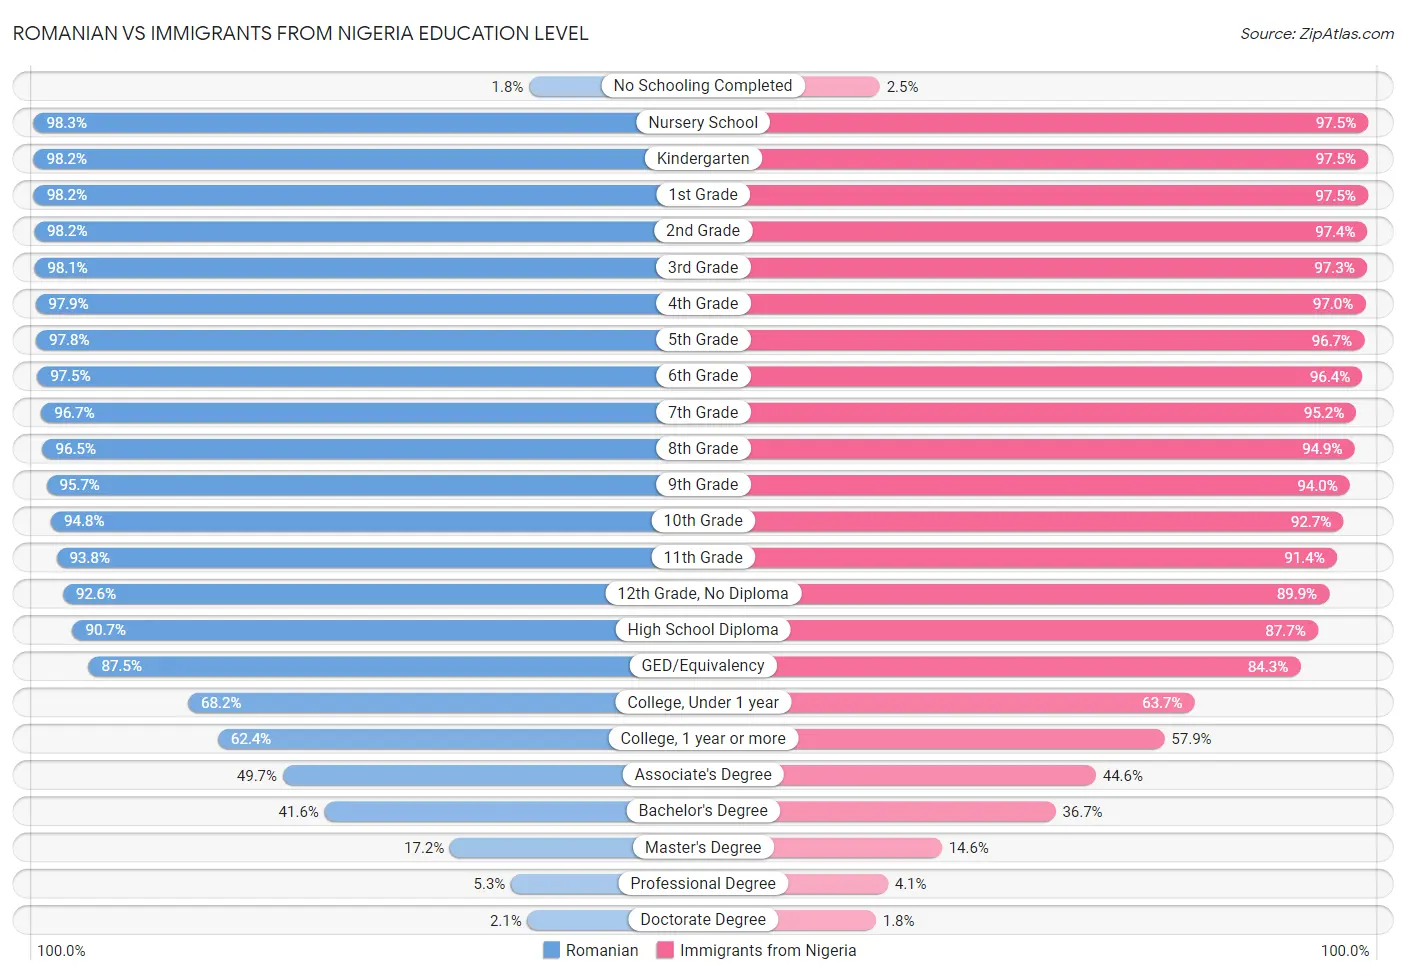 Romanian vs Immigrants from Nigeria Education Level